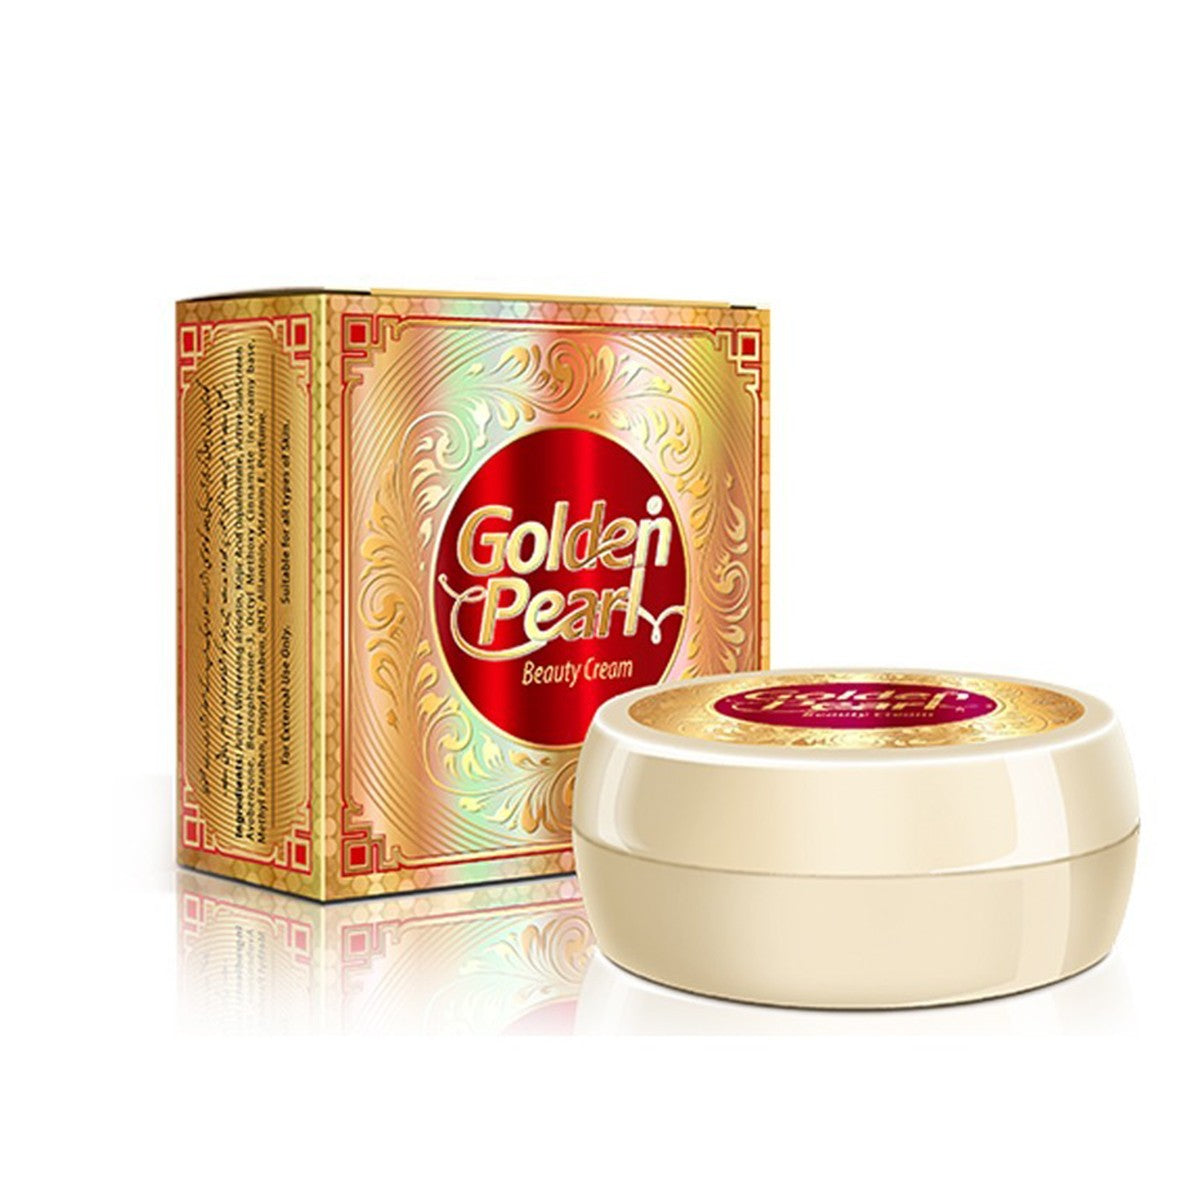 Golden Pearl beauty cream